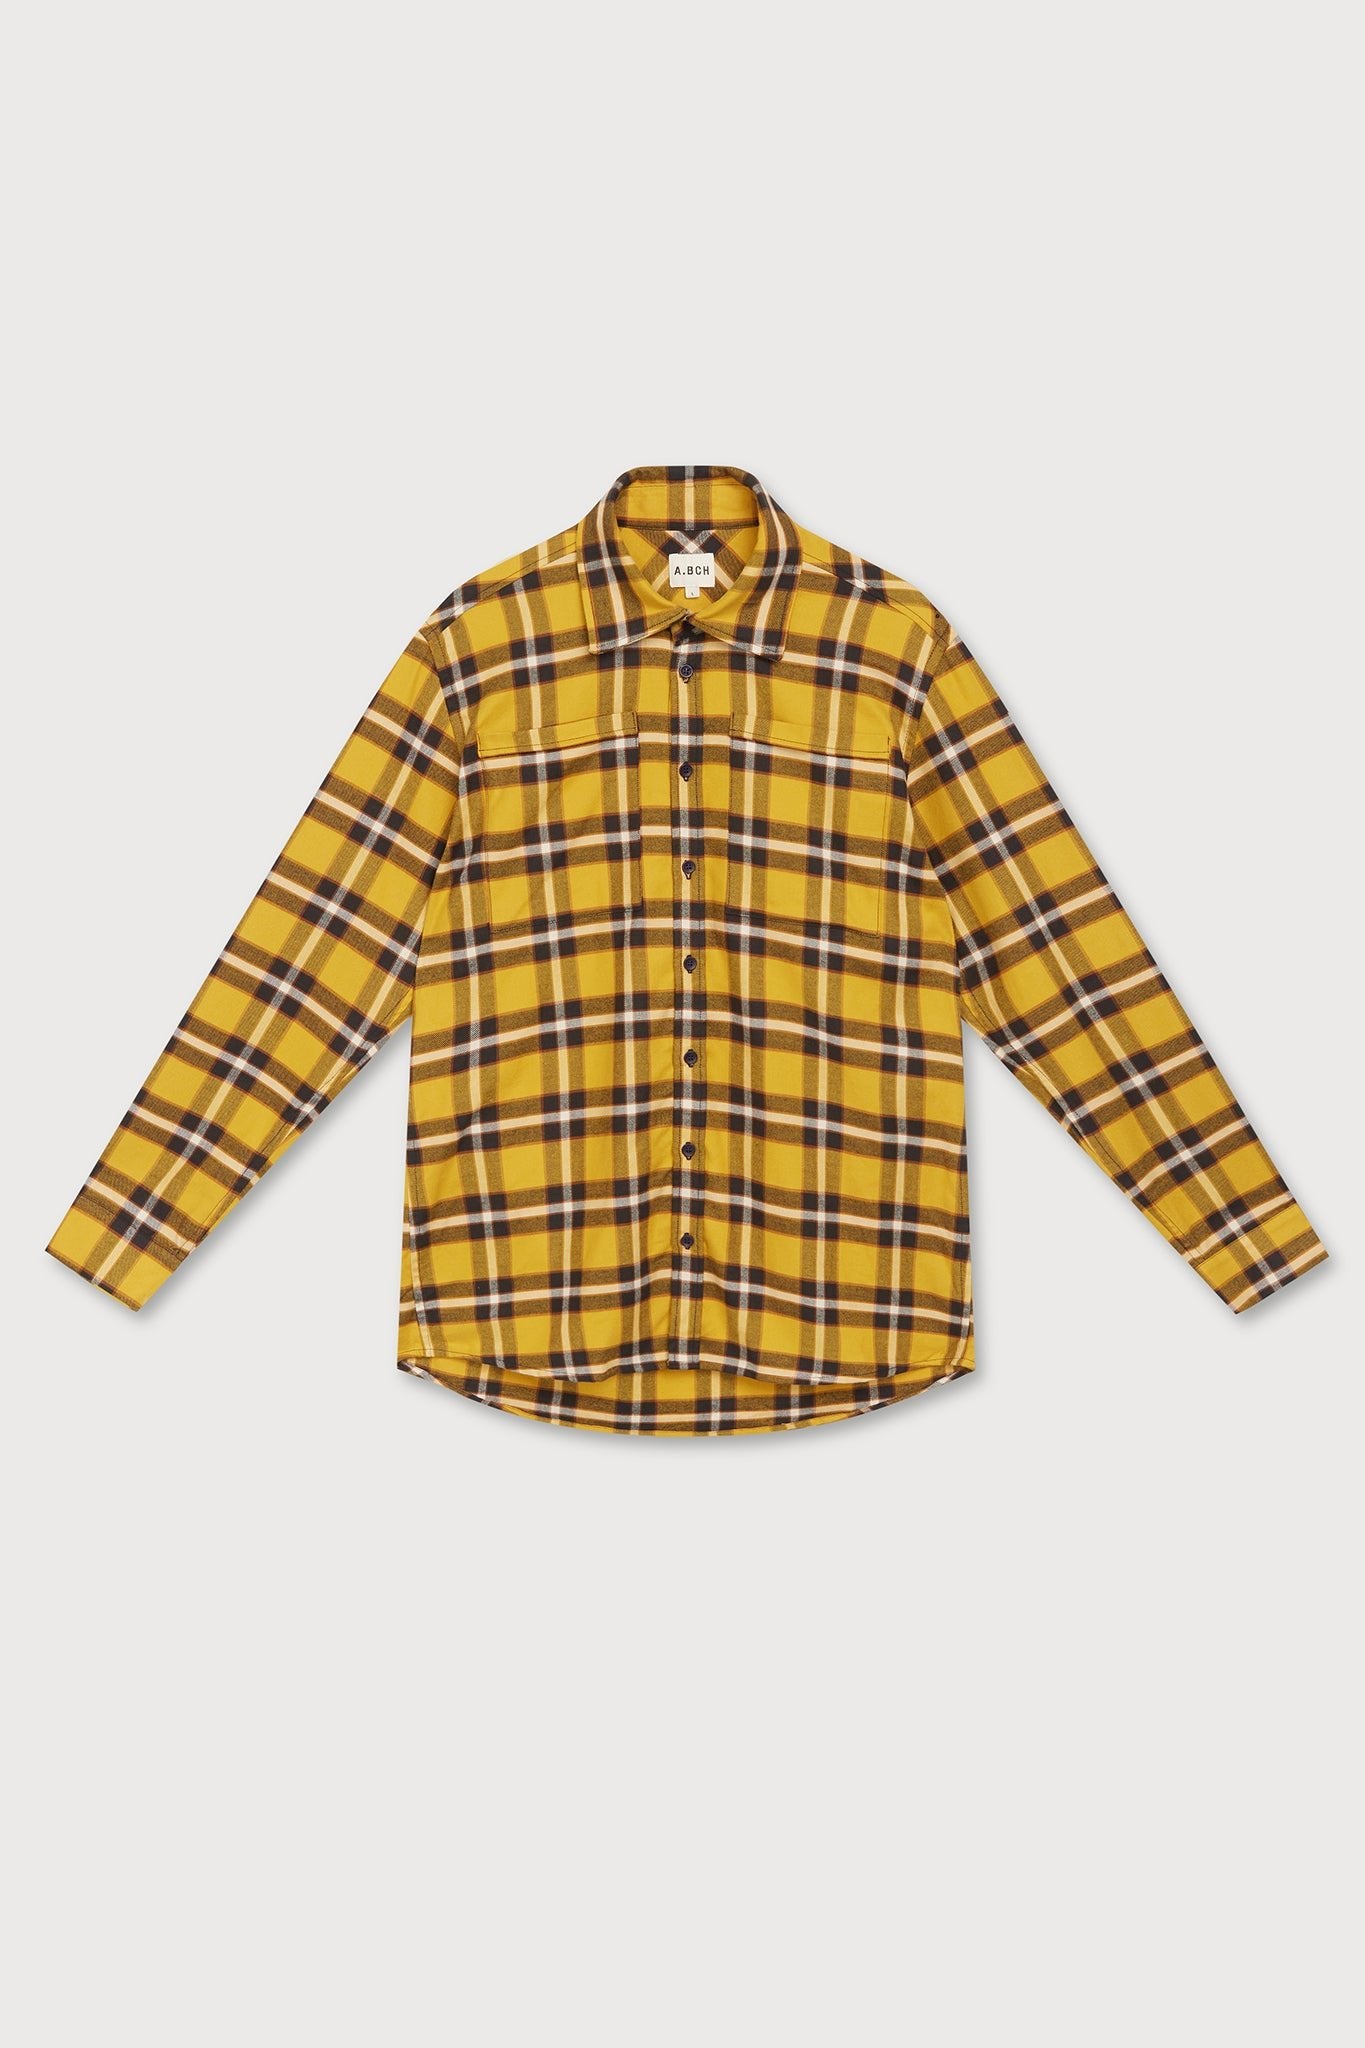 A.BCH A.46 Navy Marigold Plaid Fine Flannel Shirt in Japanese Organic Cotton